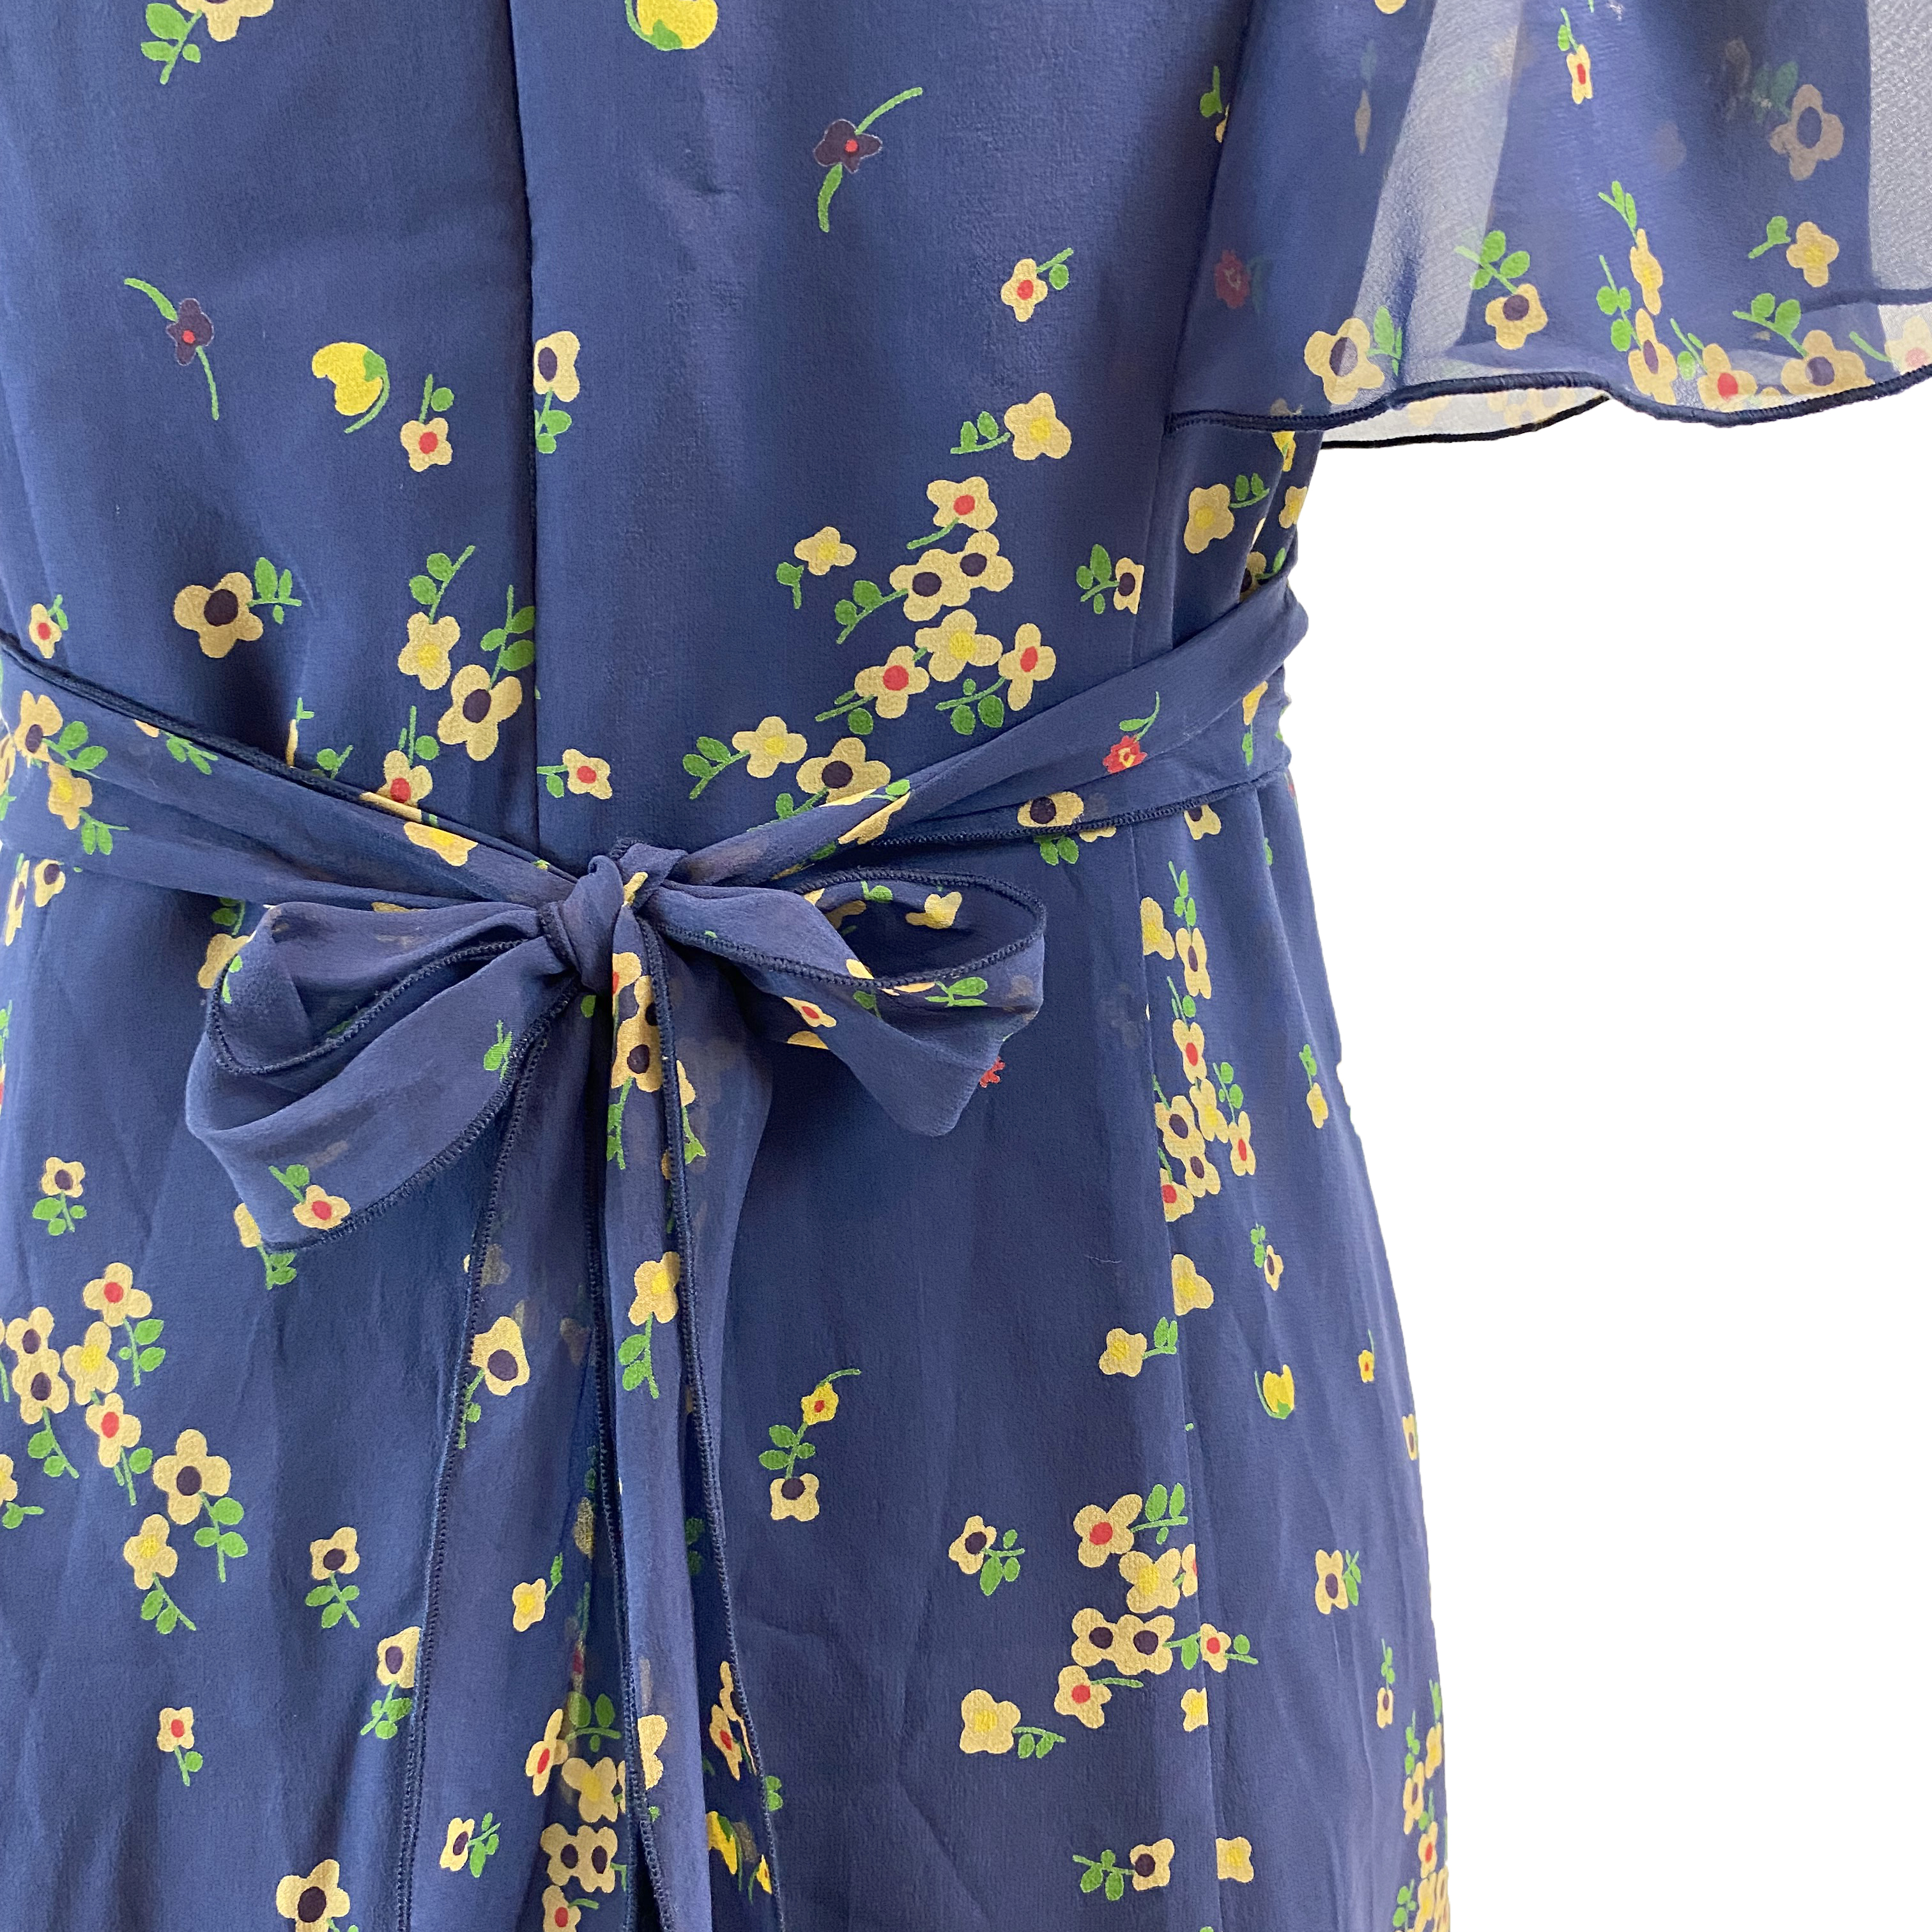 Anna Sui Vintage Style Navy Floral Silk Dress